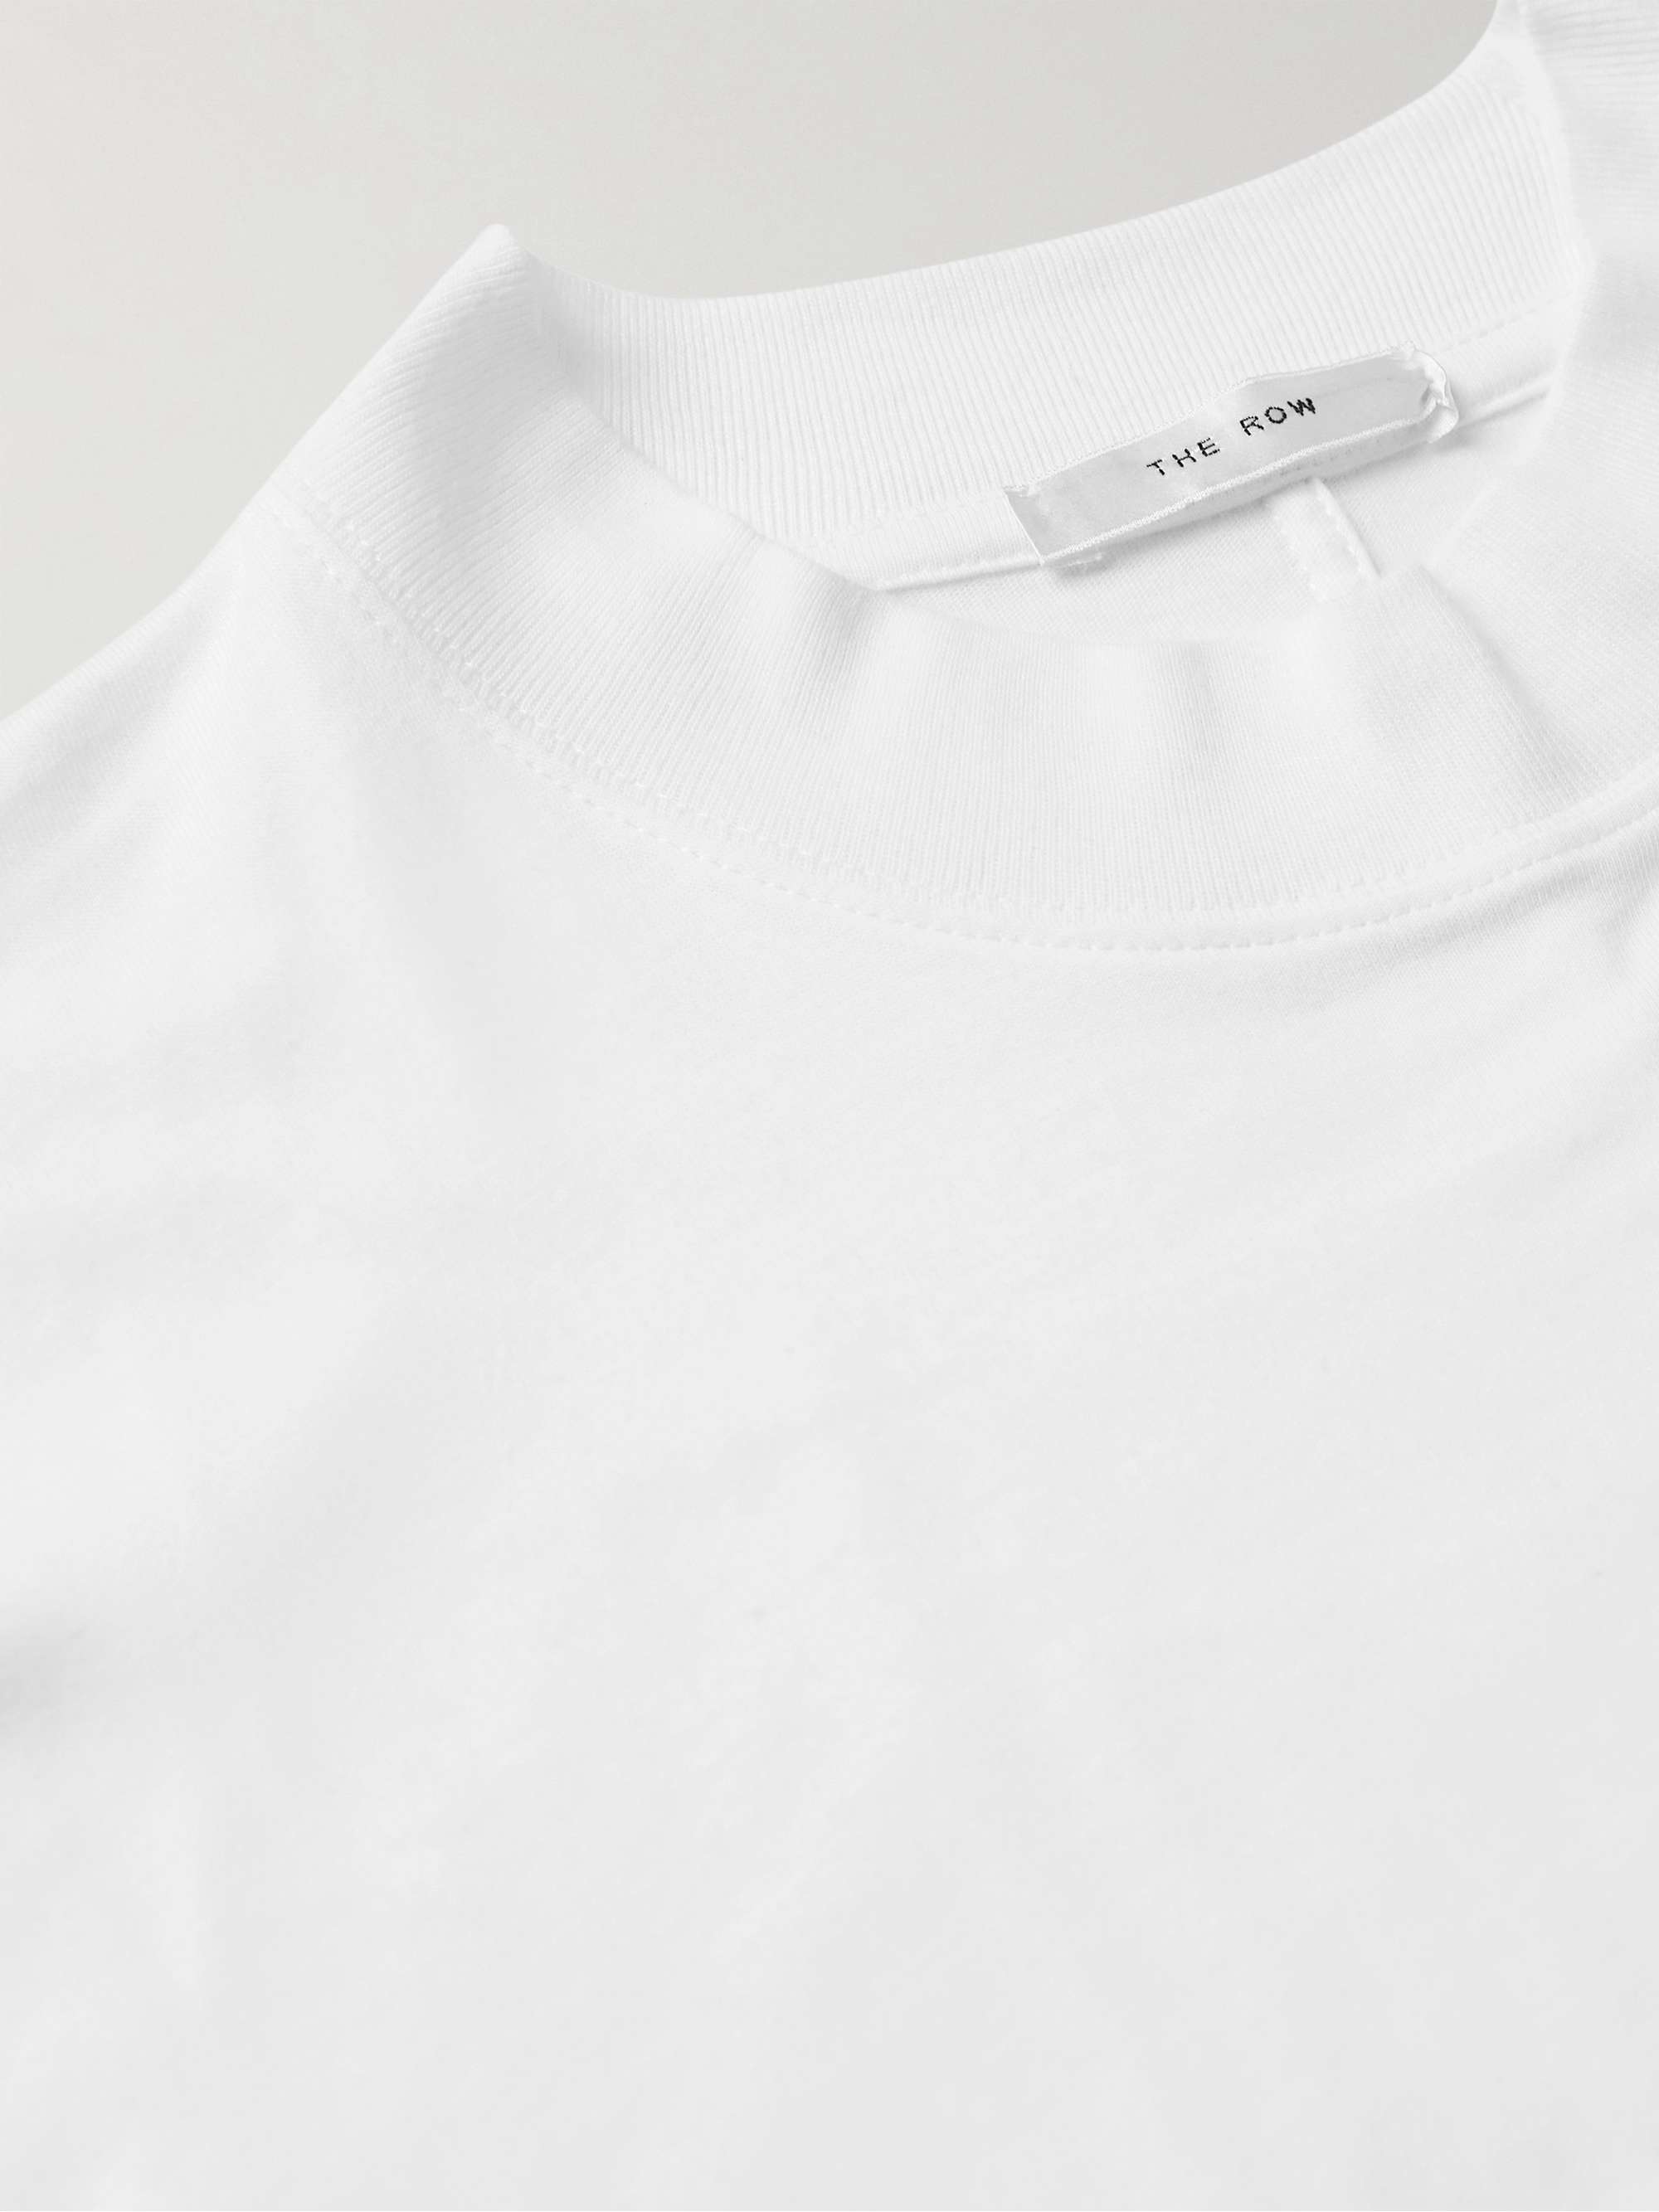 THE ROW Dustin Cotton-Jersey T-Shirt for Men | MR PORTER